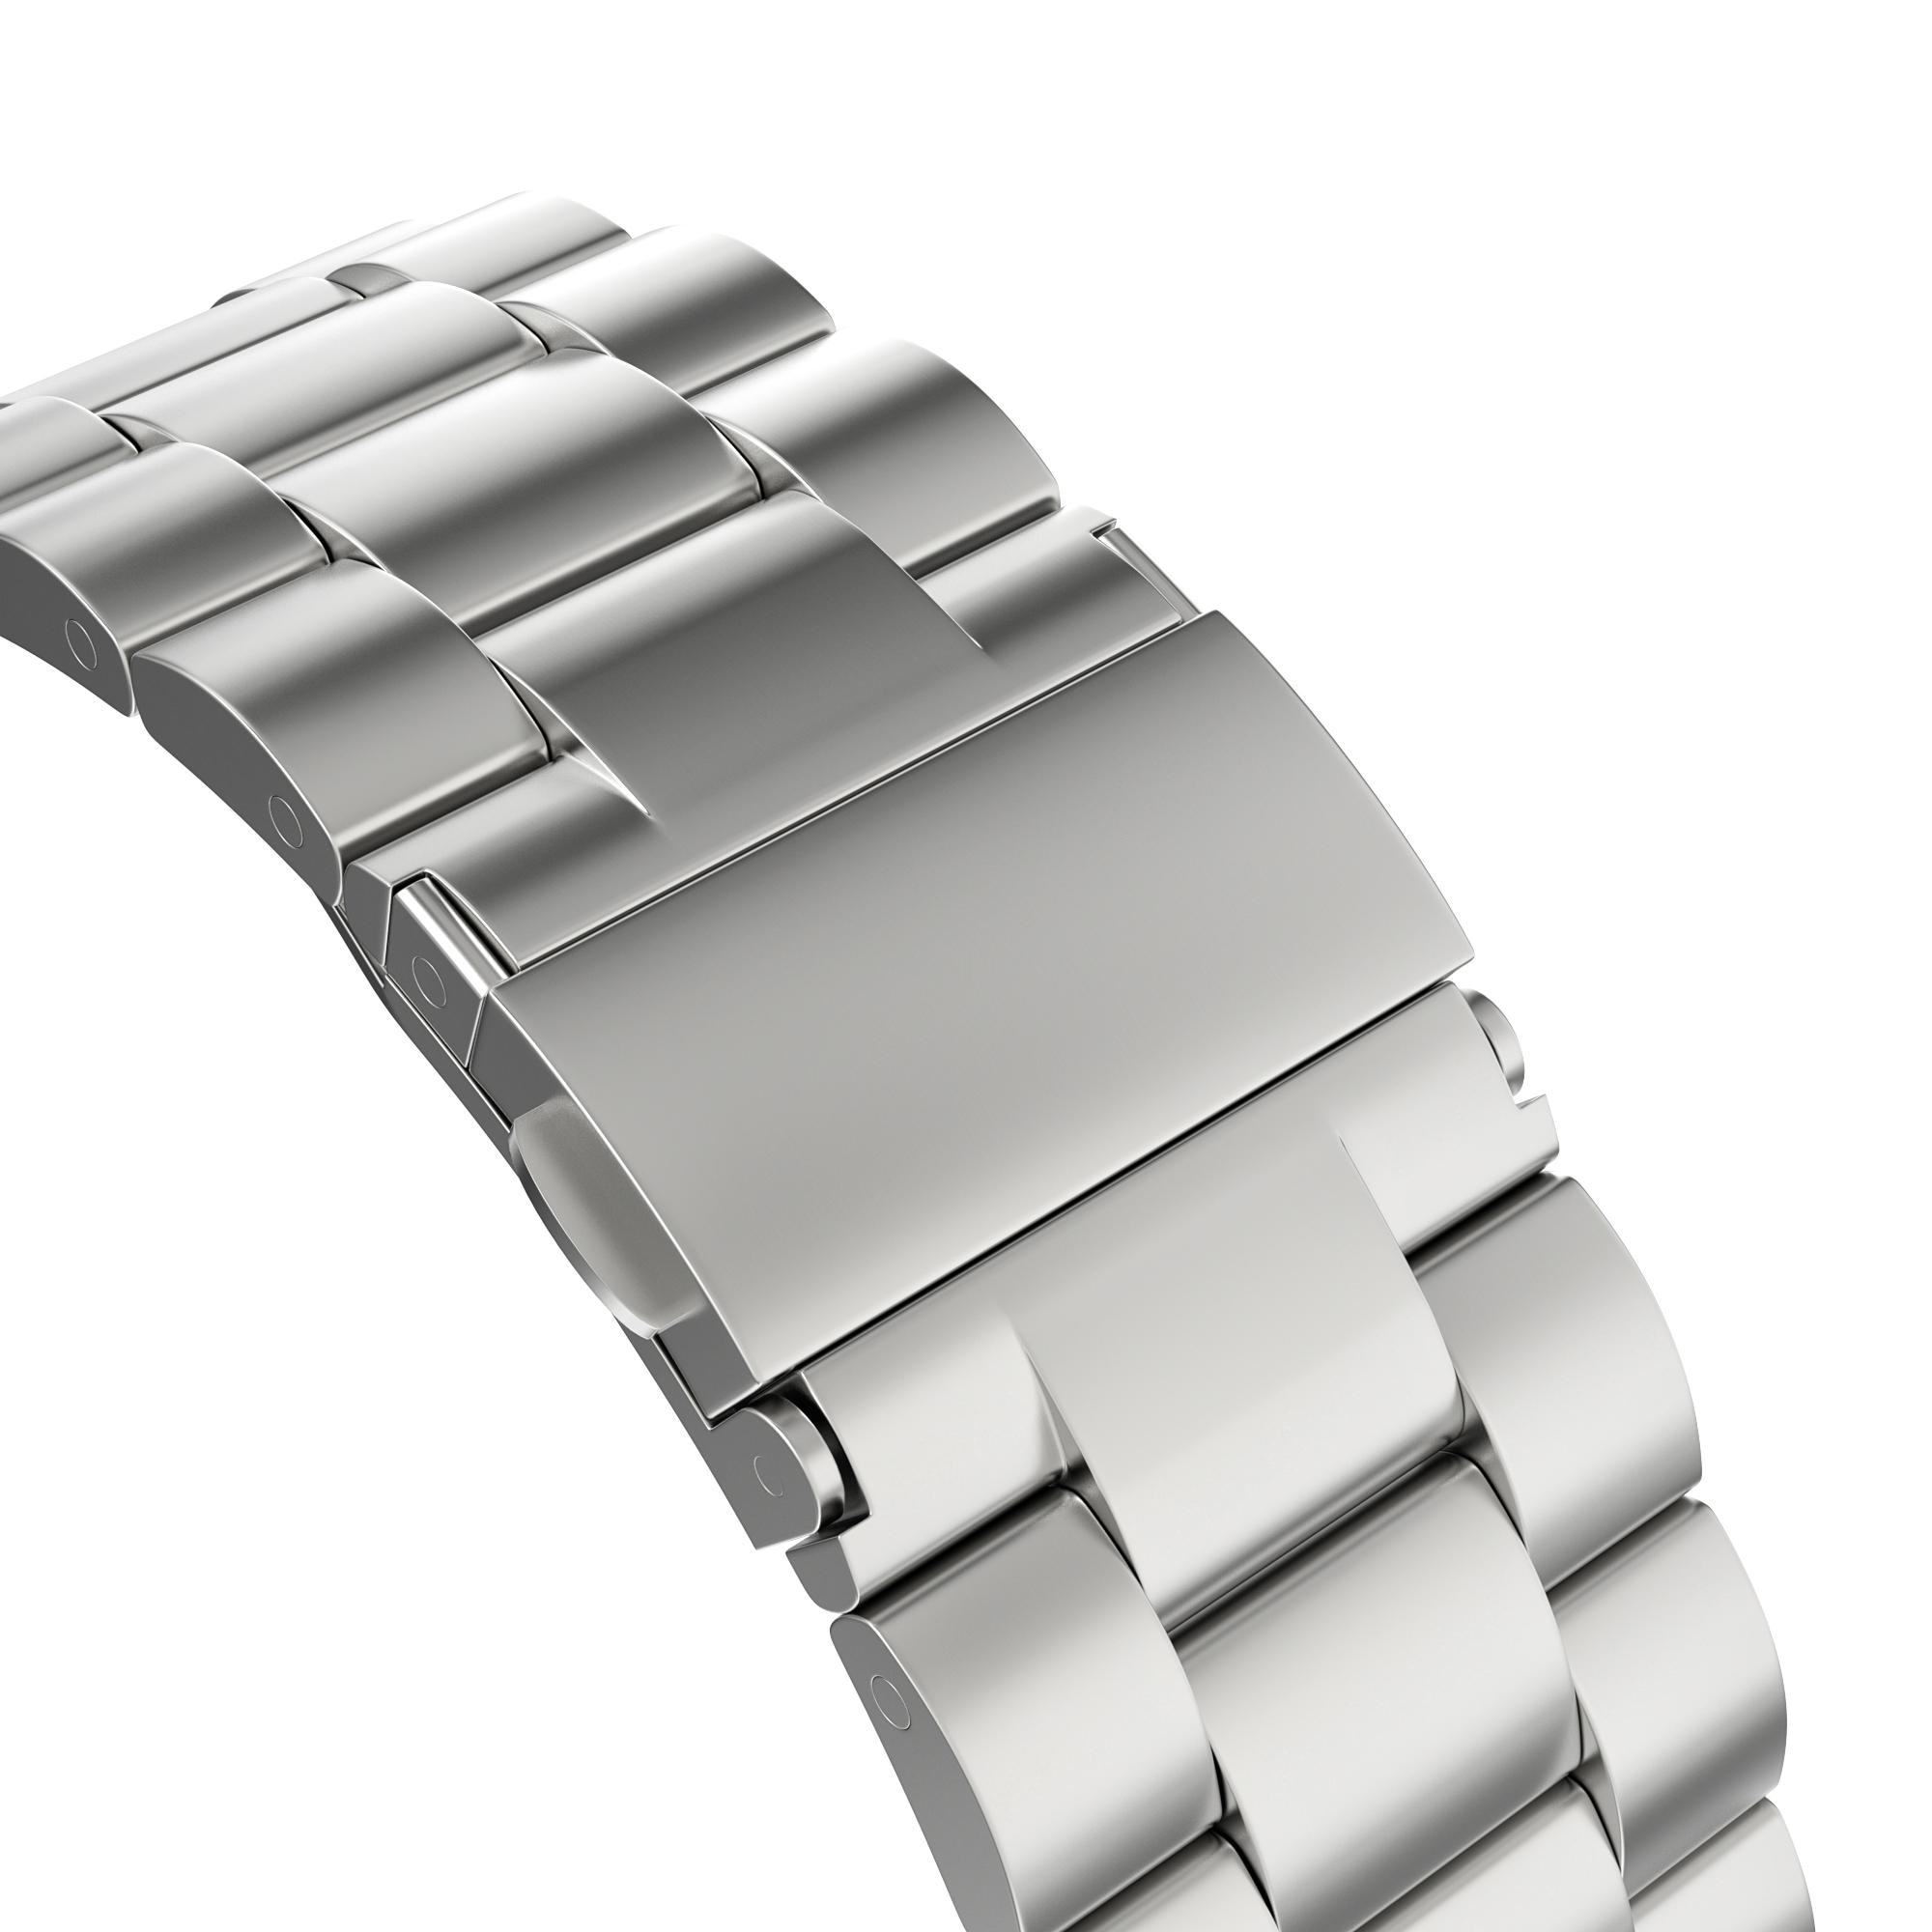 Apple Watch 38mm Stilrent länkarmband i metall, silver